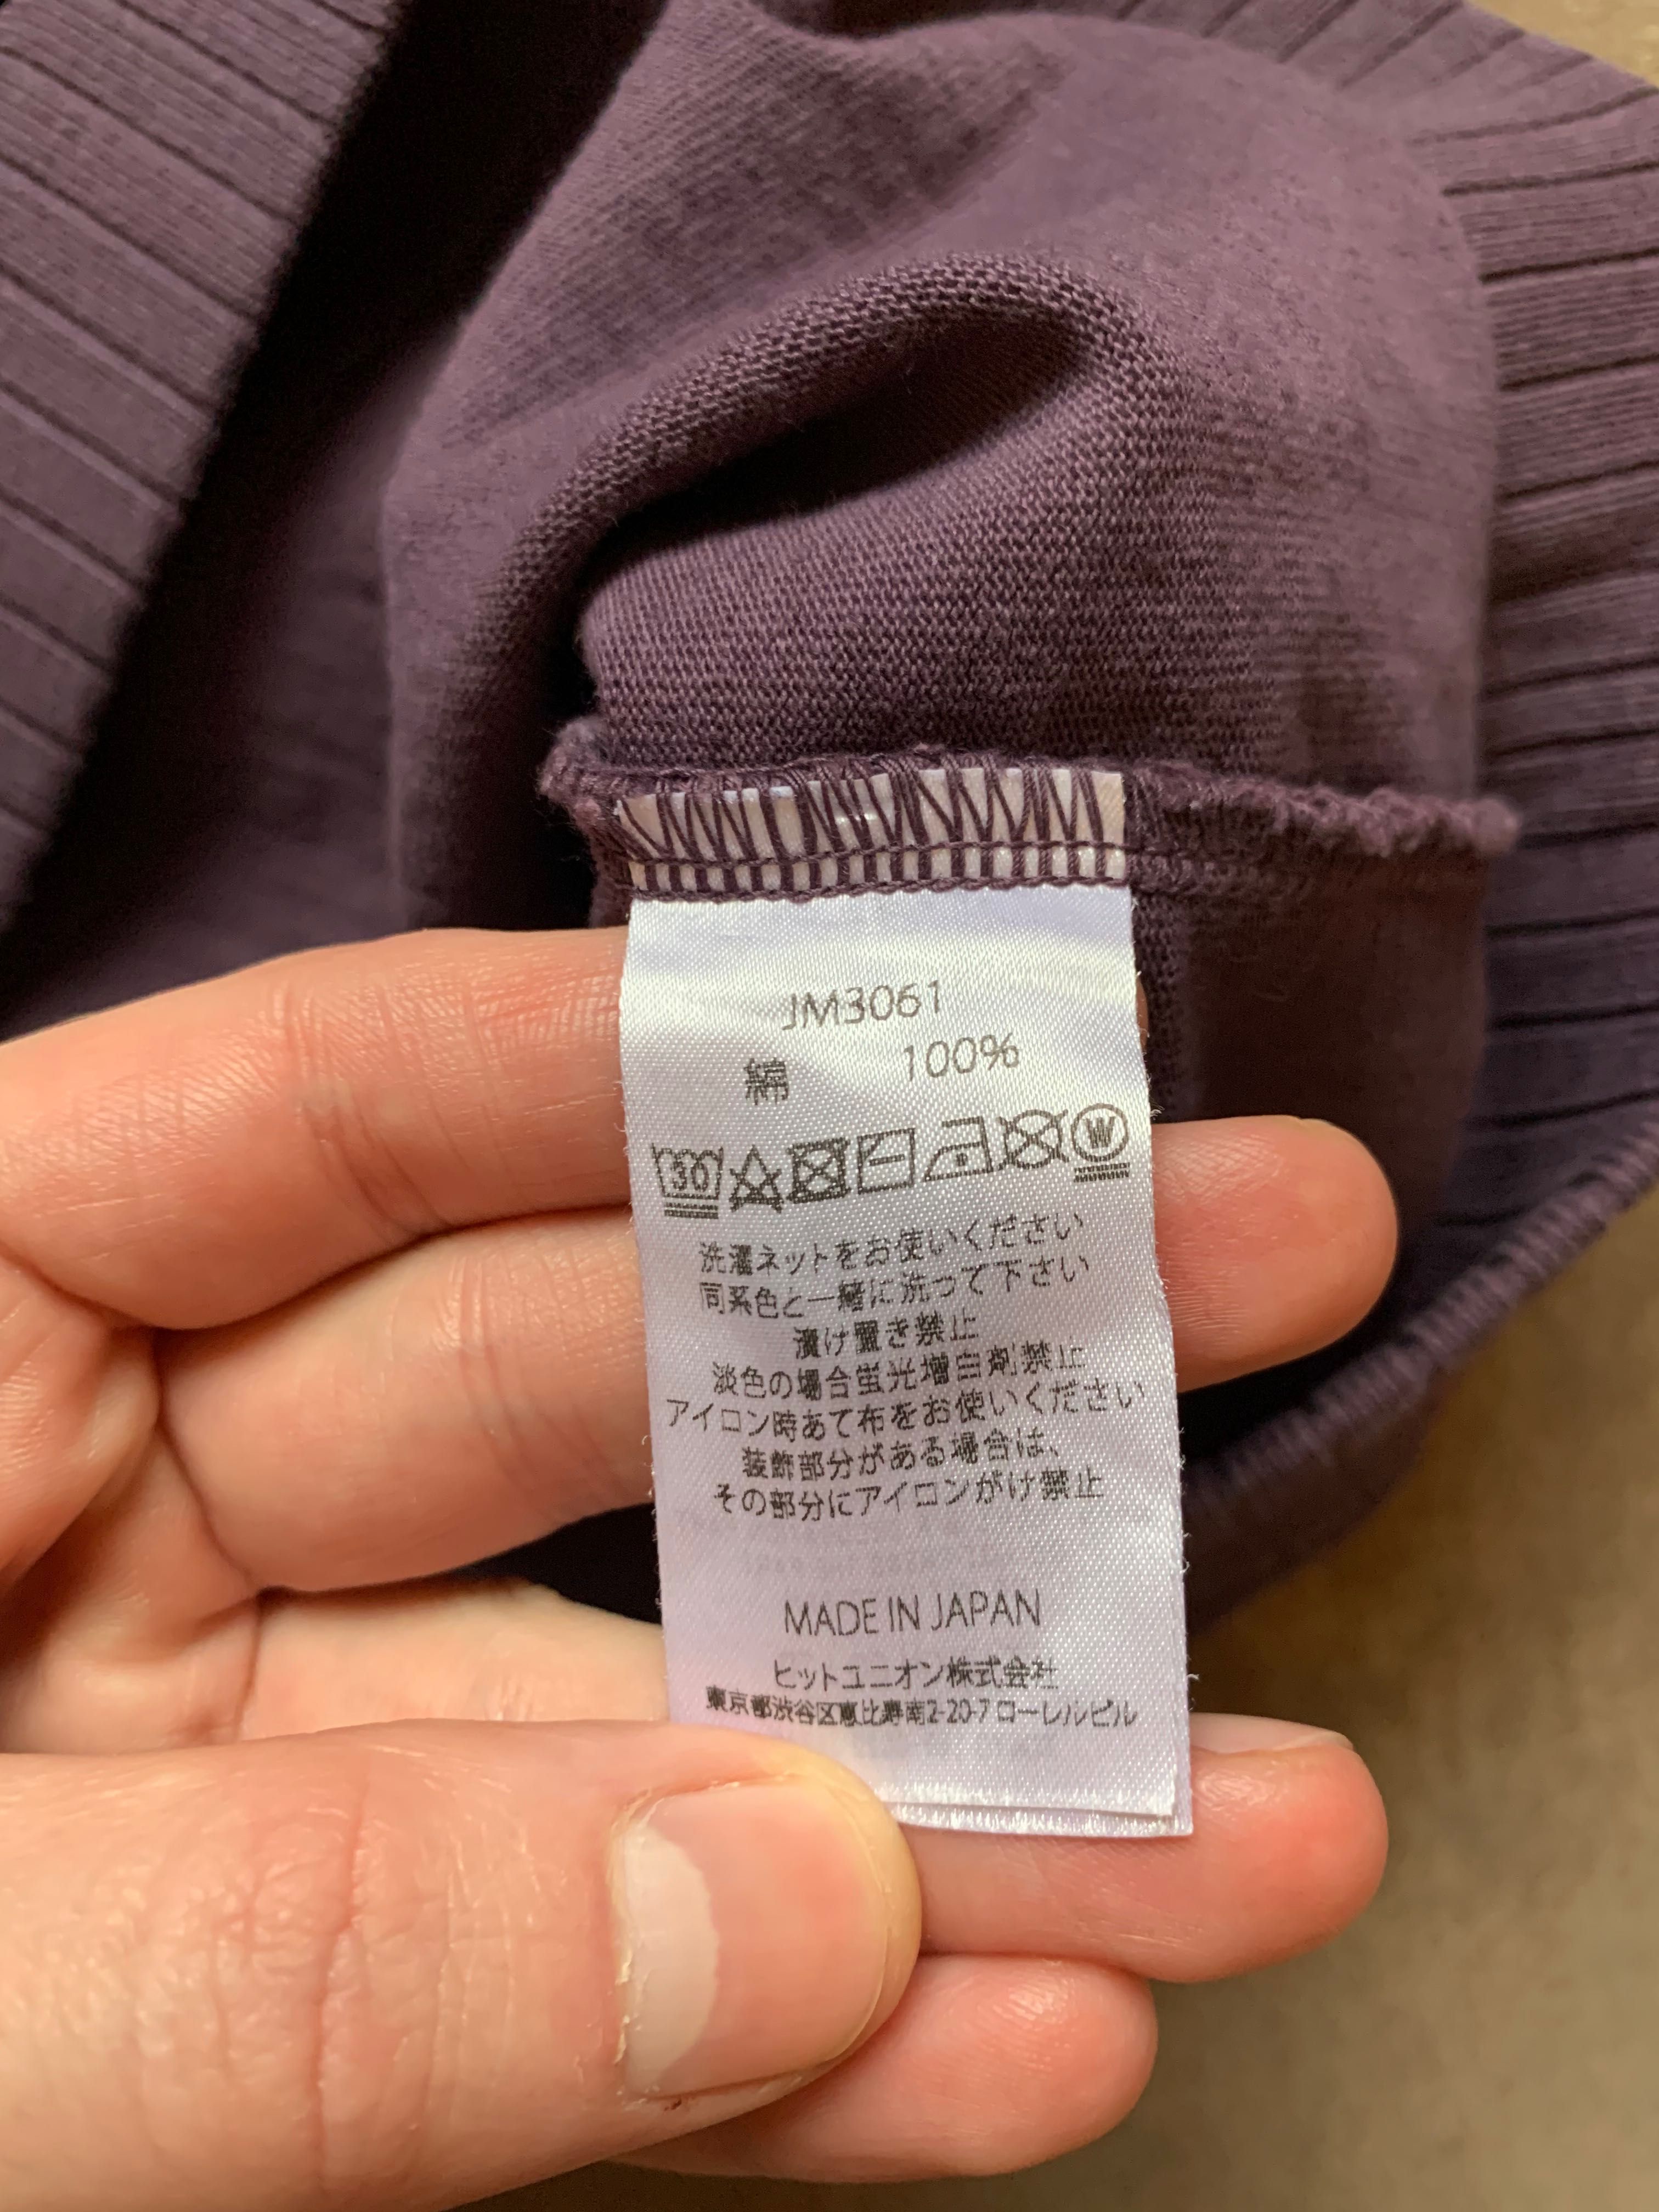 Крутейшая футболка Jackman Dotsume Owners Polo JM3061 Made in Japan